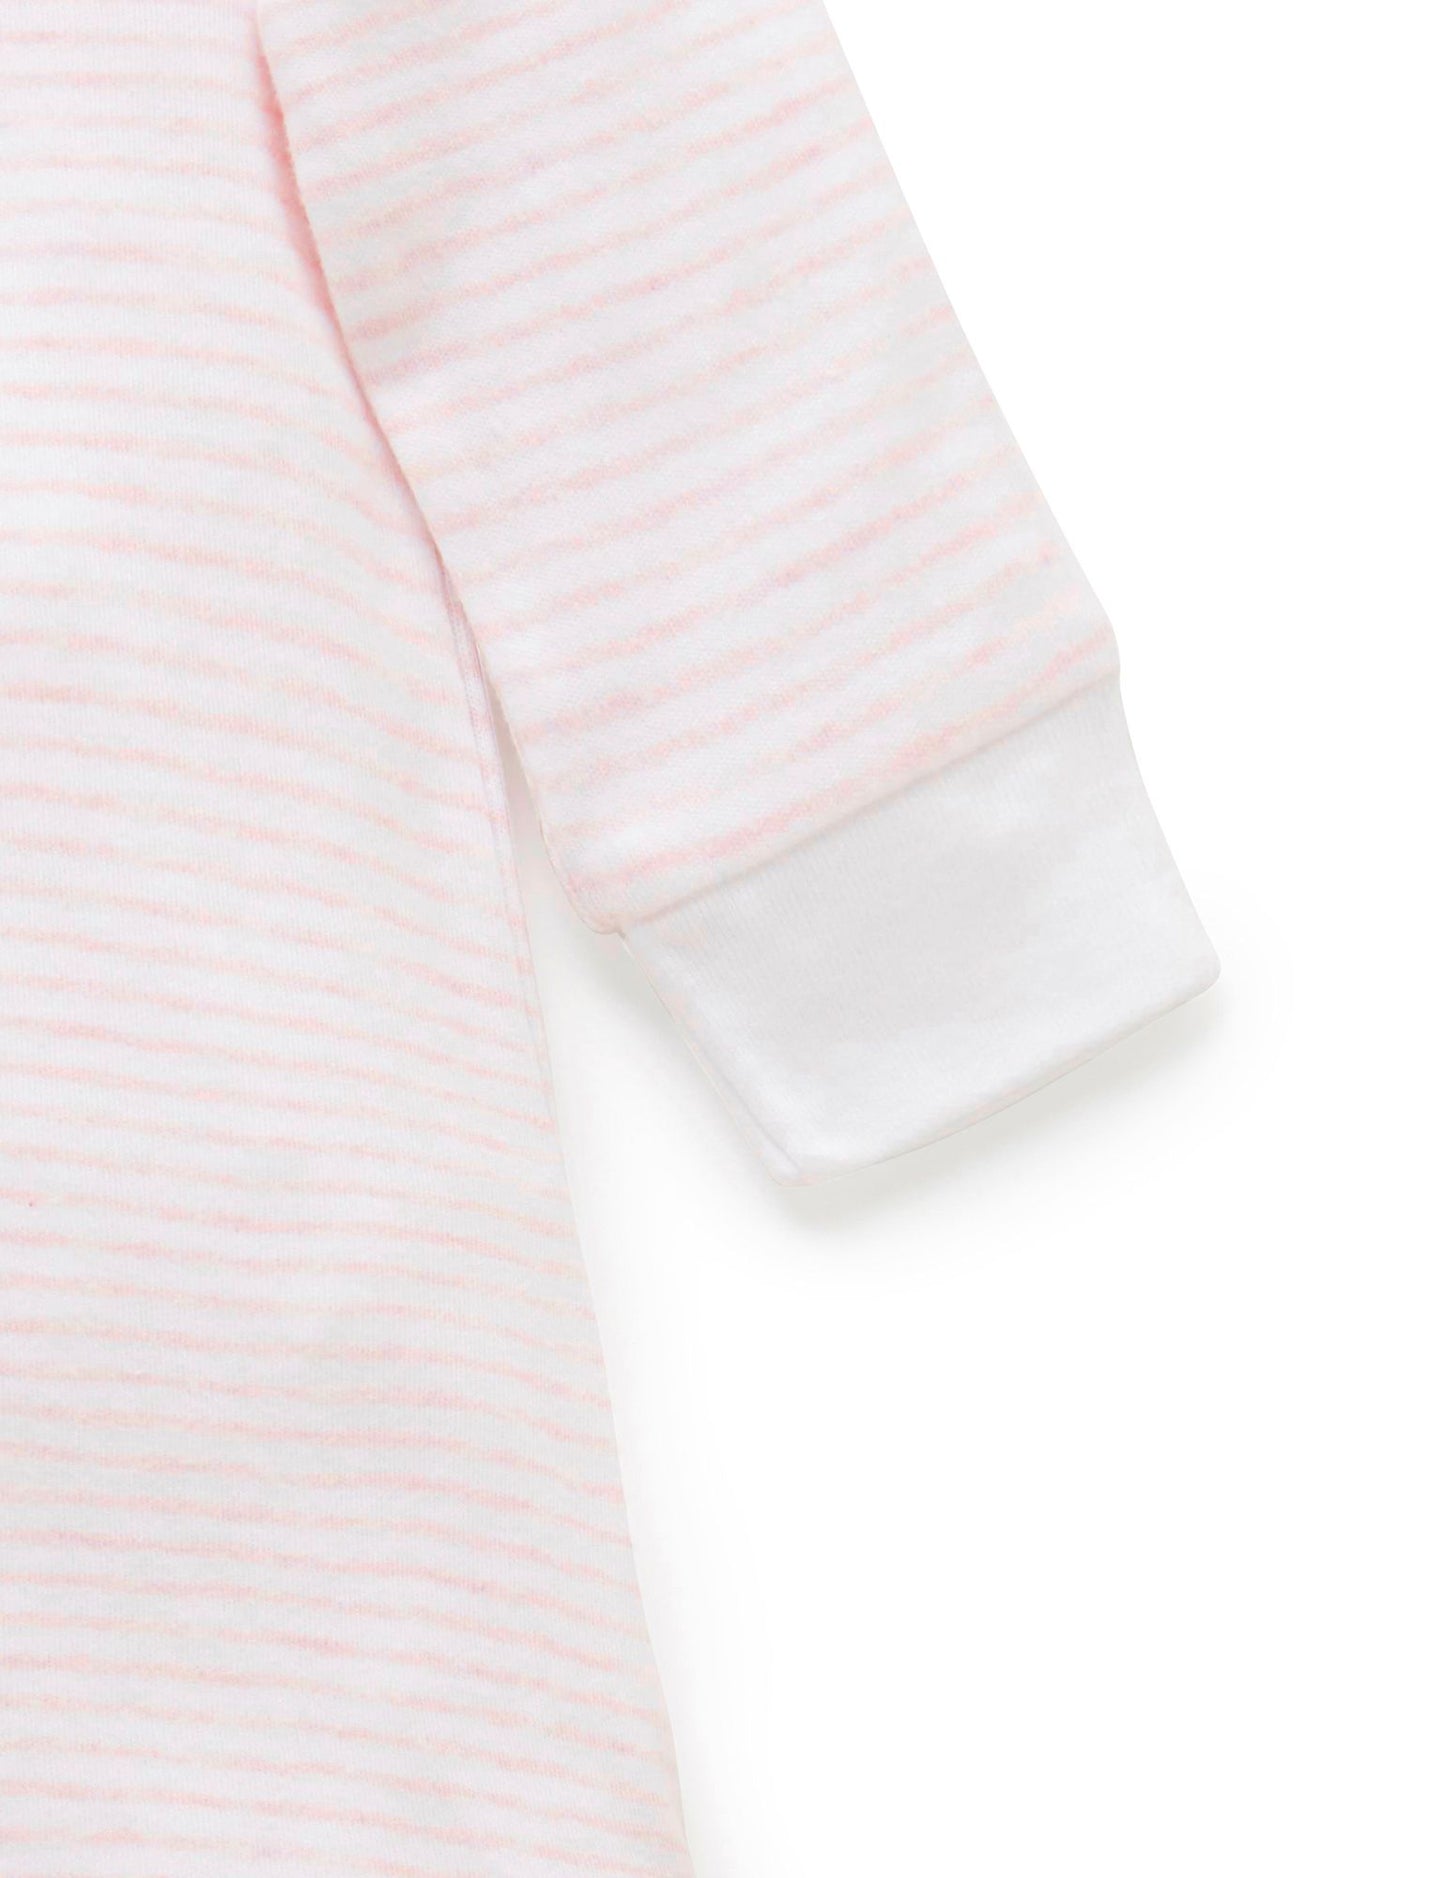 Purebaby Organics Long Sleeve Sleepsuit Pale Pink - 0-3 Months